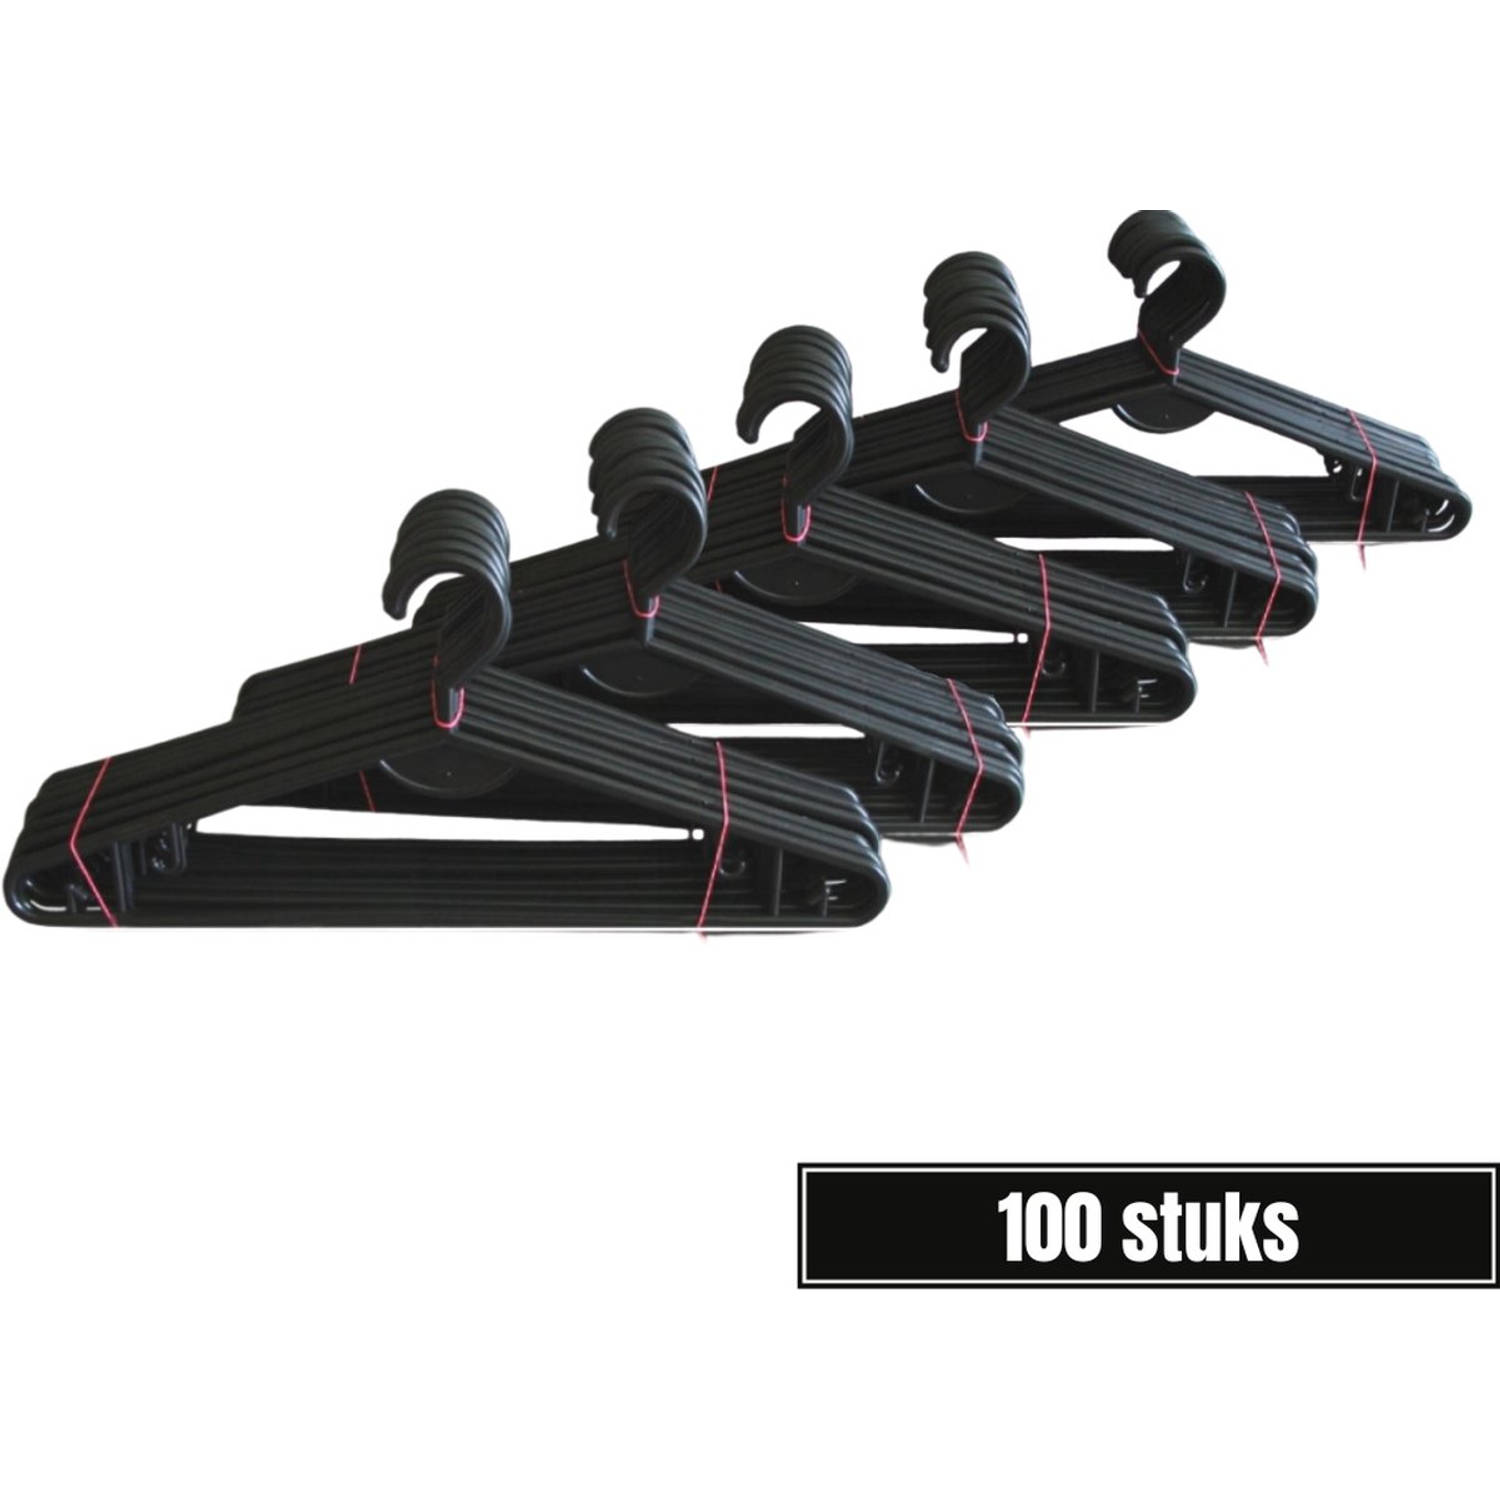 Synx Tools Kledinghangers Zwart Voordeelverpakking 100 stuks - Ophangers - Kleerhangers met Broeklat / Roklat - Multi Pack 100 stuks - Kapstokken